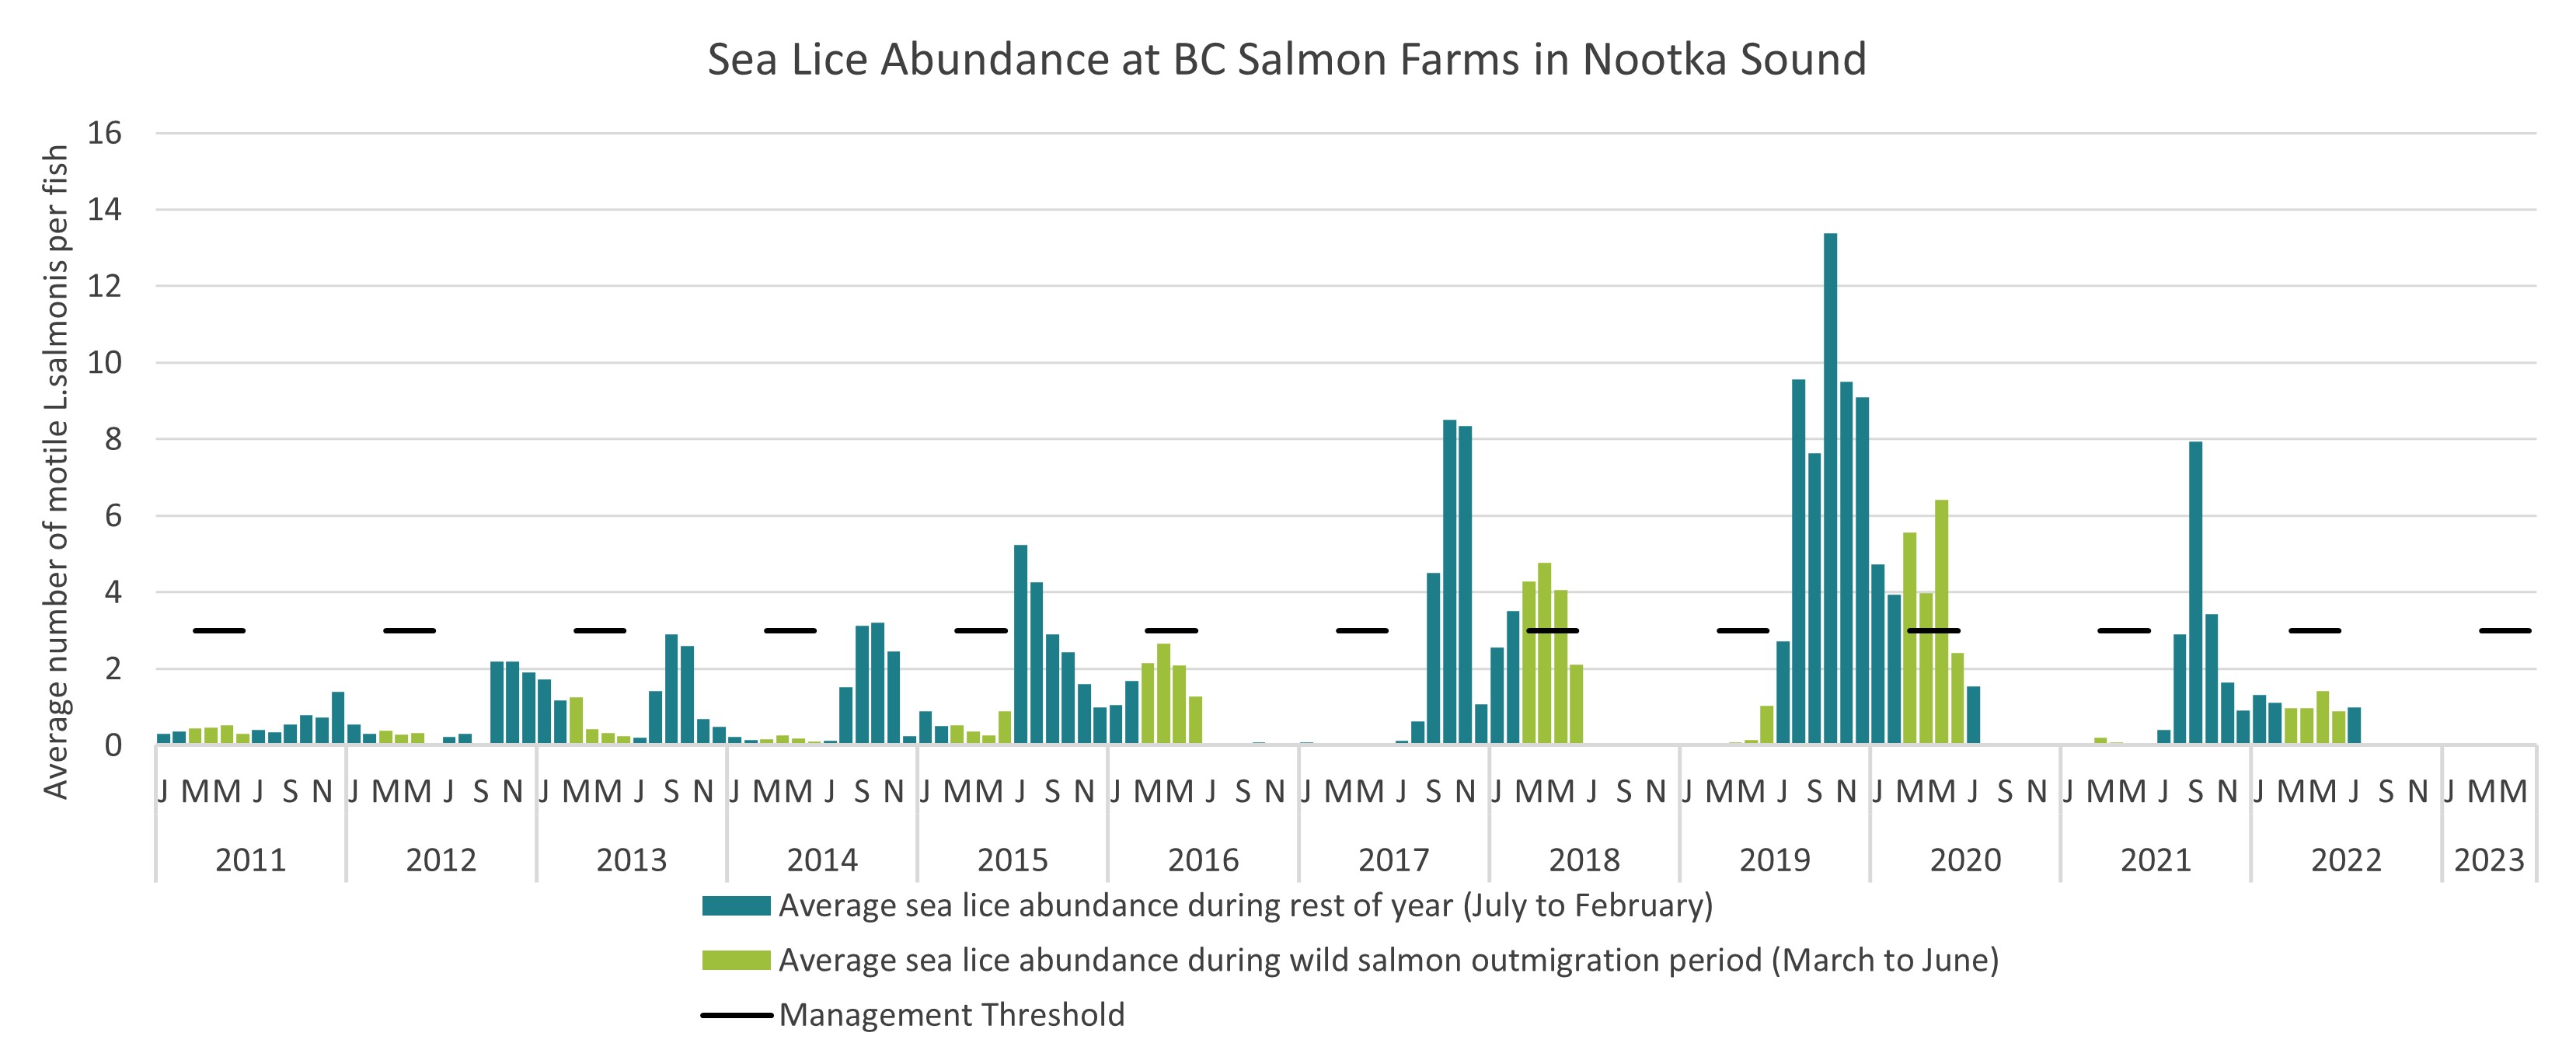 Sea Lice Abundance at BC Salmon Farms in the Nootka Sound area, 2011 to 2022